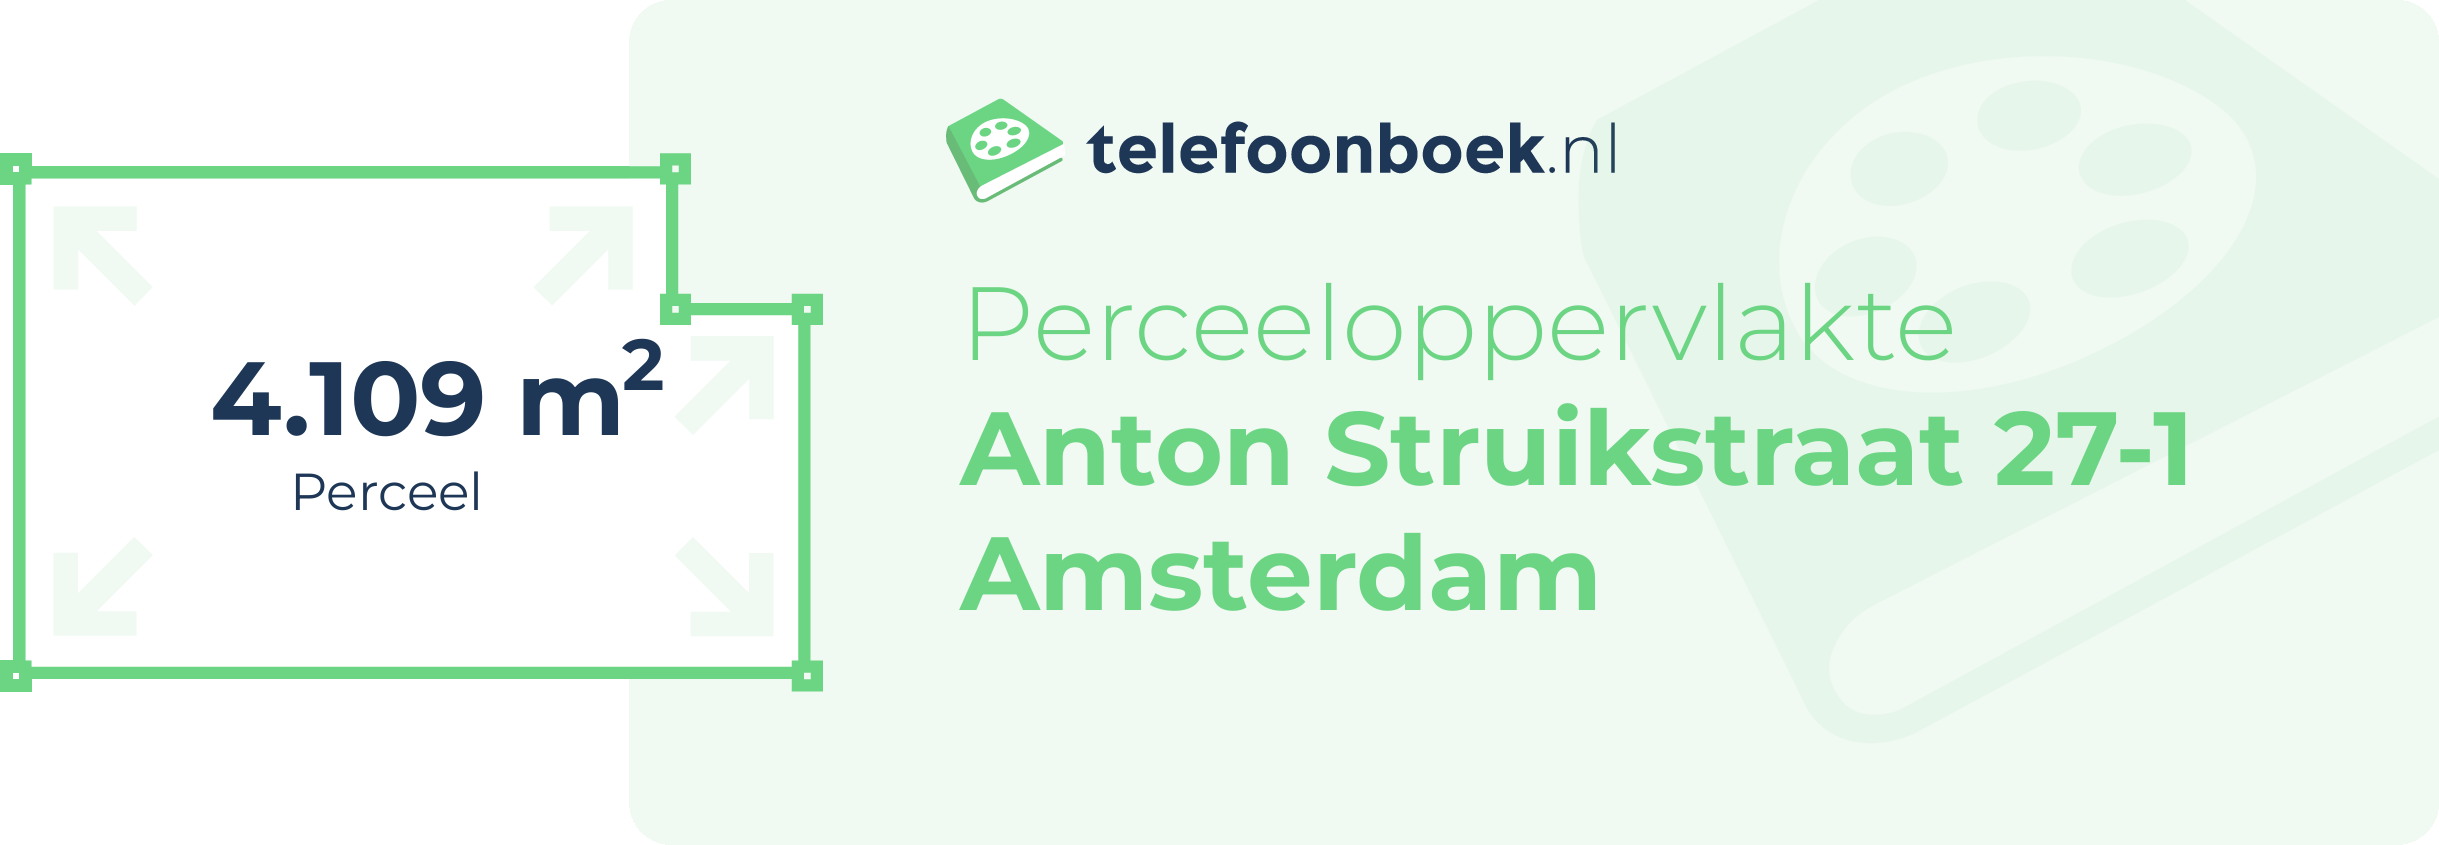 Perceeloppervlakte Anton Struikstraat 27-1 Amsterdam